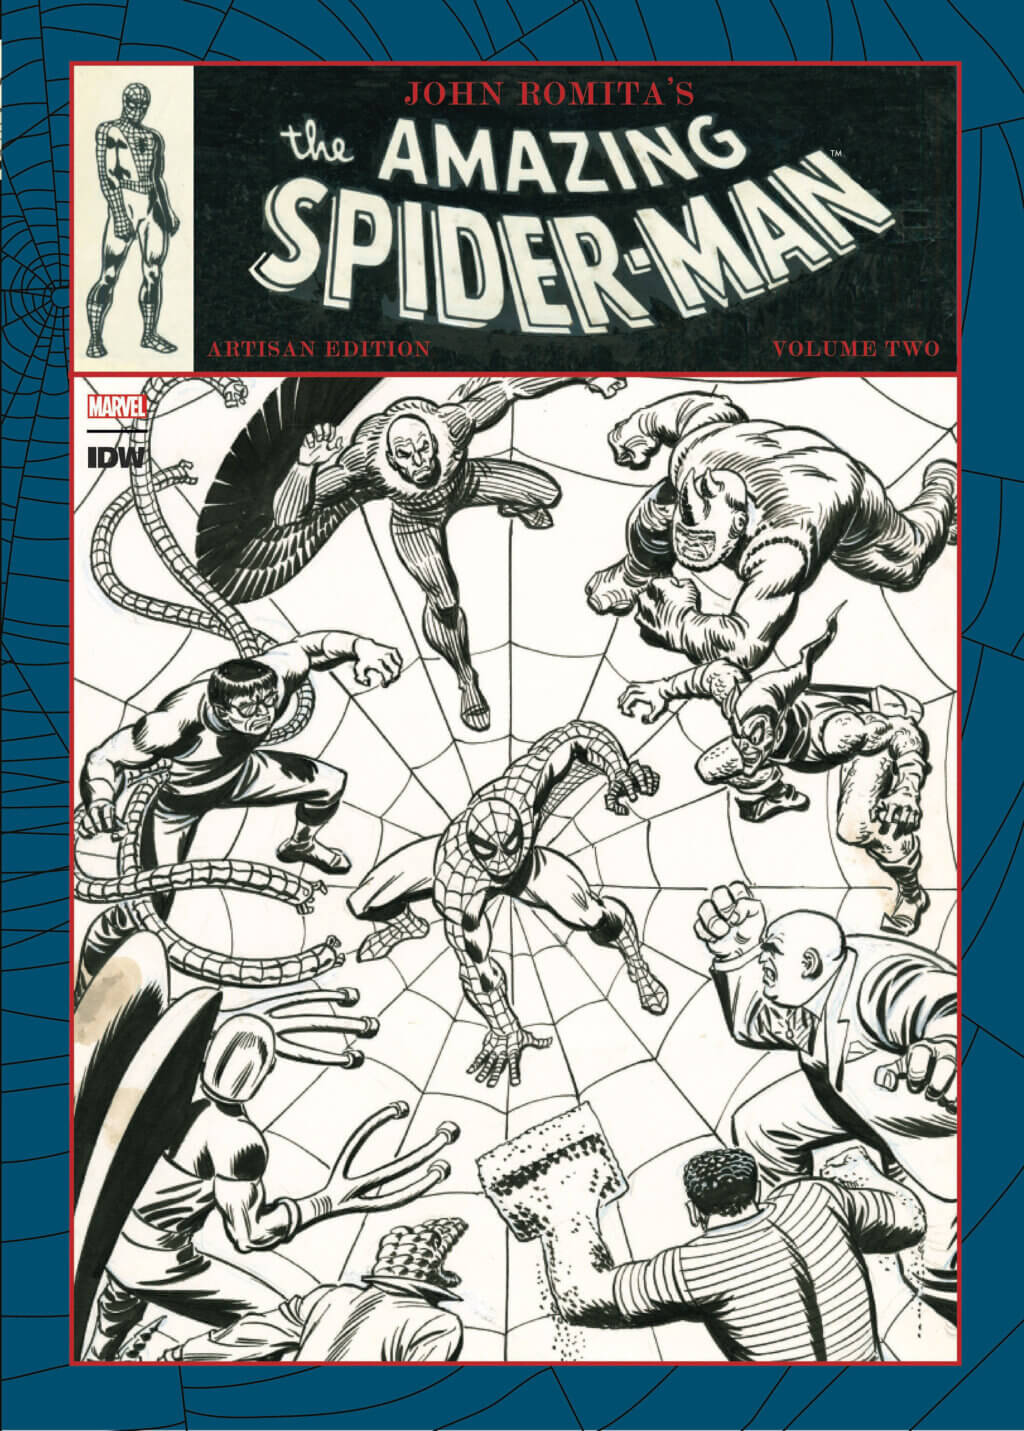 John Romita's The Amazing Spider Man Vol. 2 Artisan Edition cover